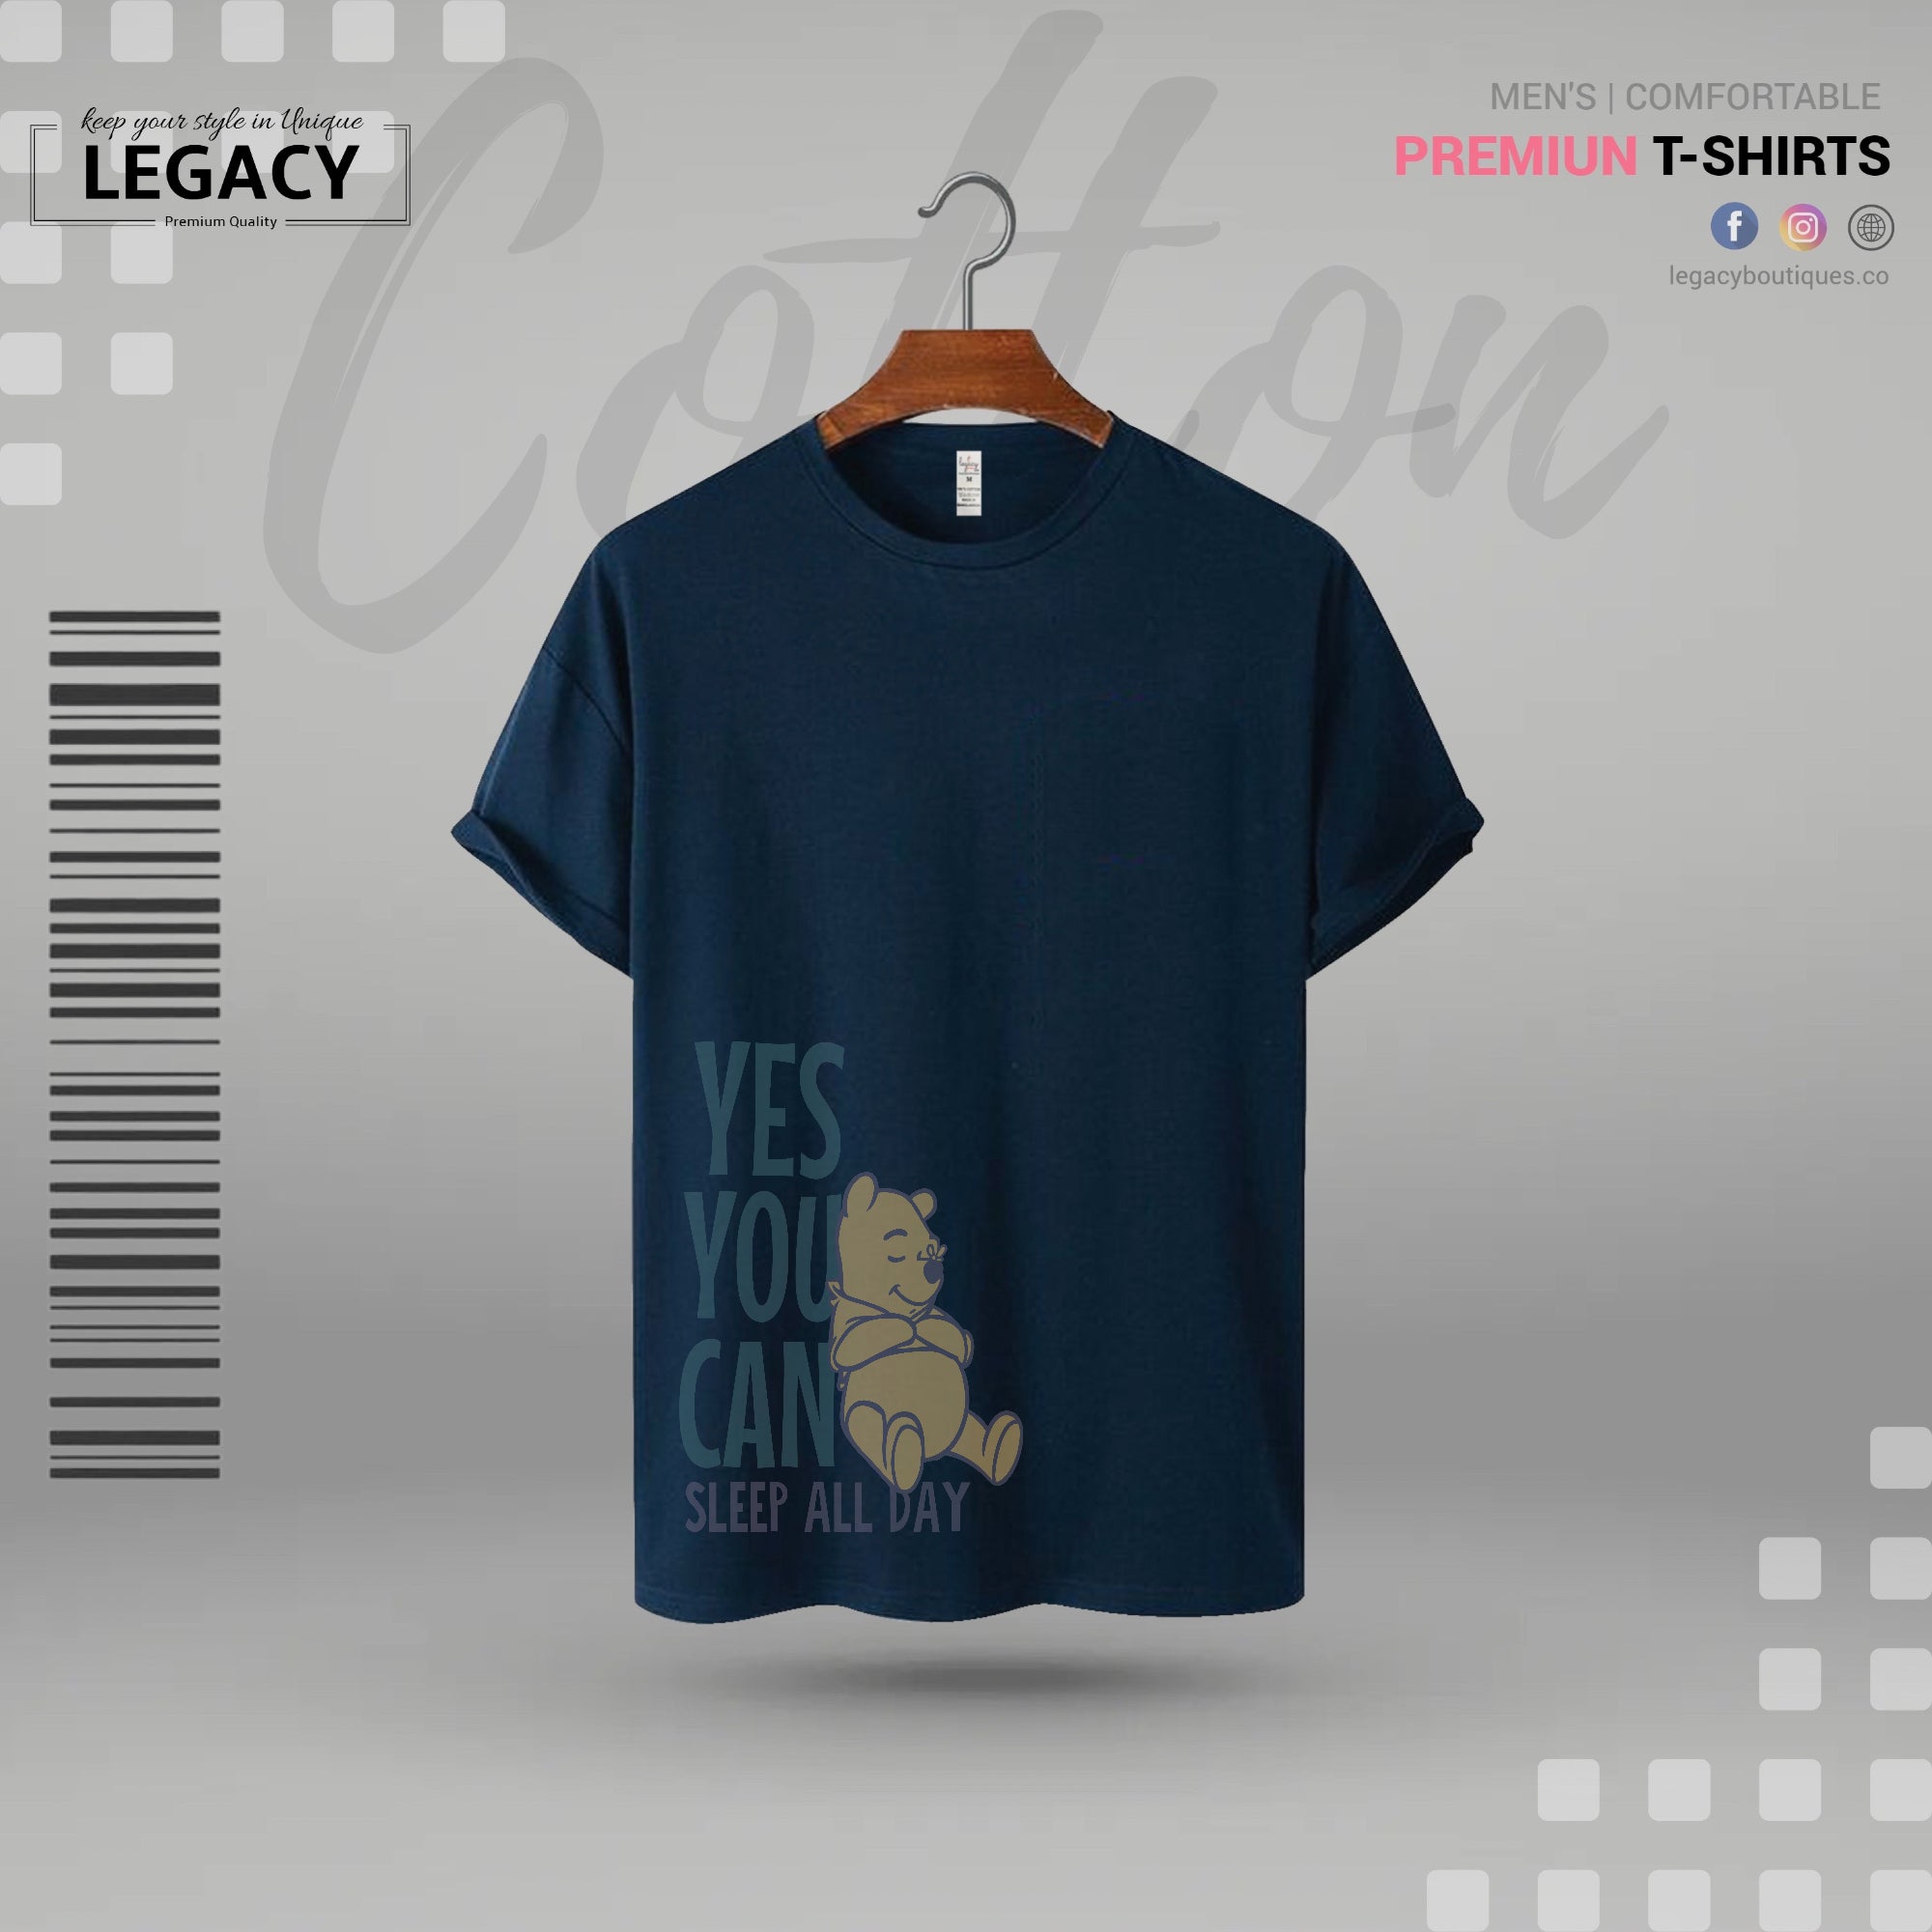 Sort Sleeve Men's Premium Designer Edition T Shirt - Legacy Boutiques